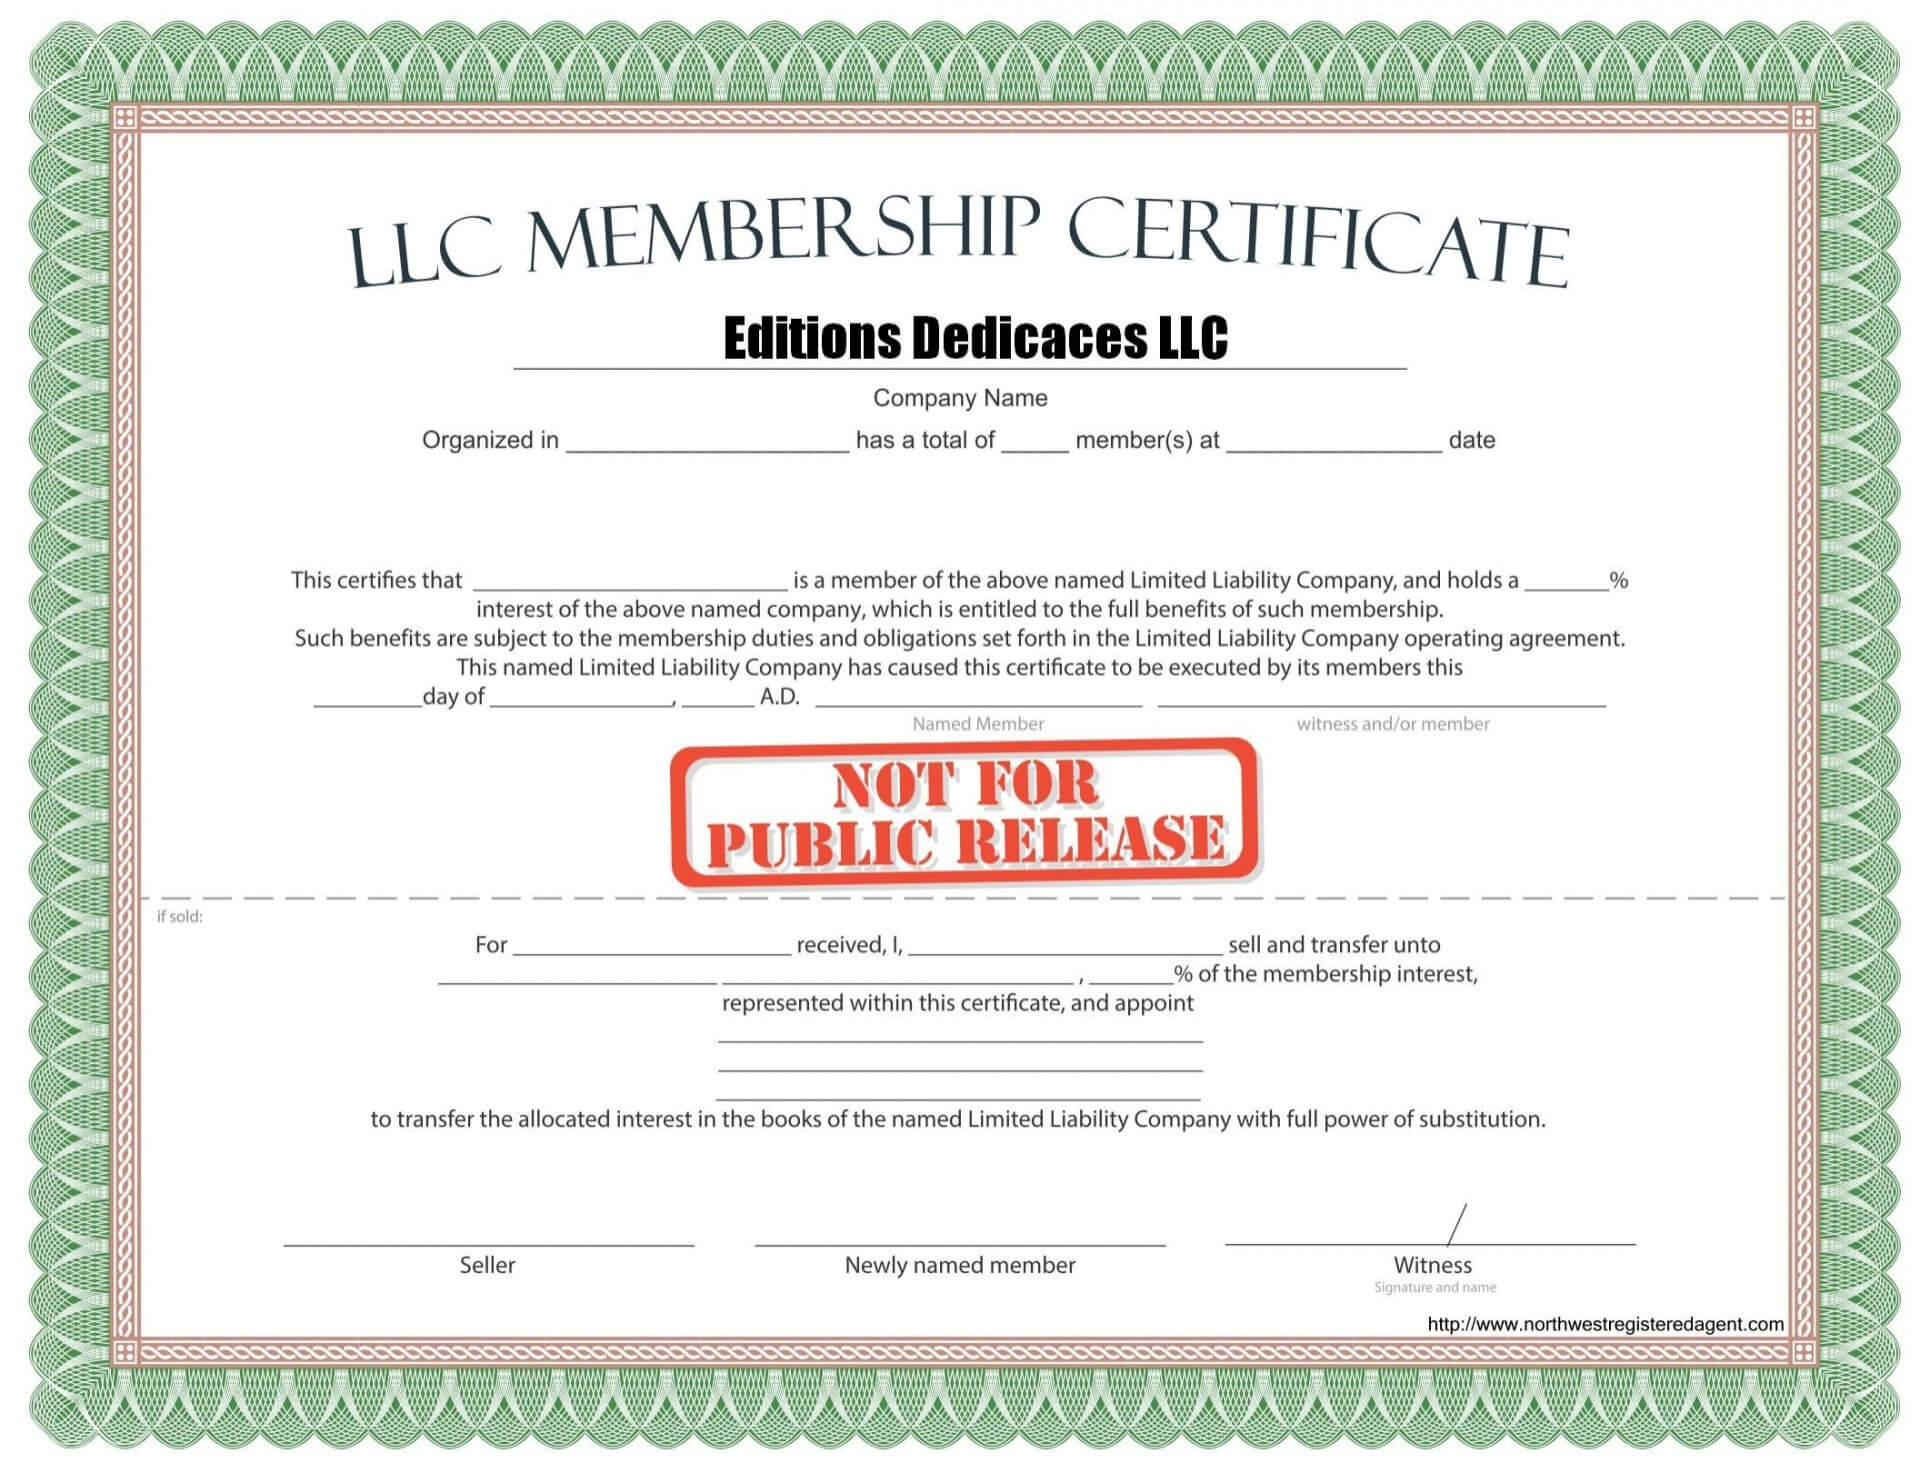 011 Duke6 Detail Llc Member Certificate Template Staggering With Regard To Llc Membership Certificate Template